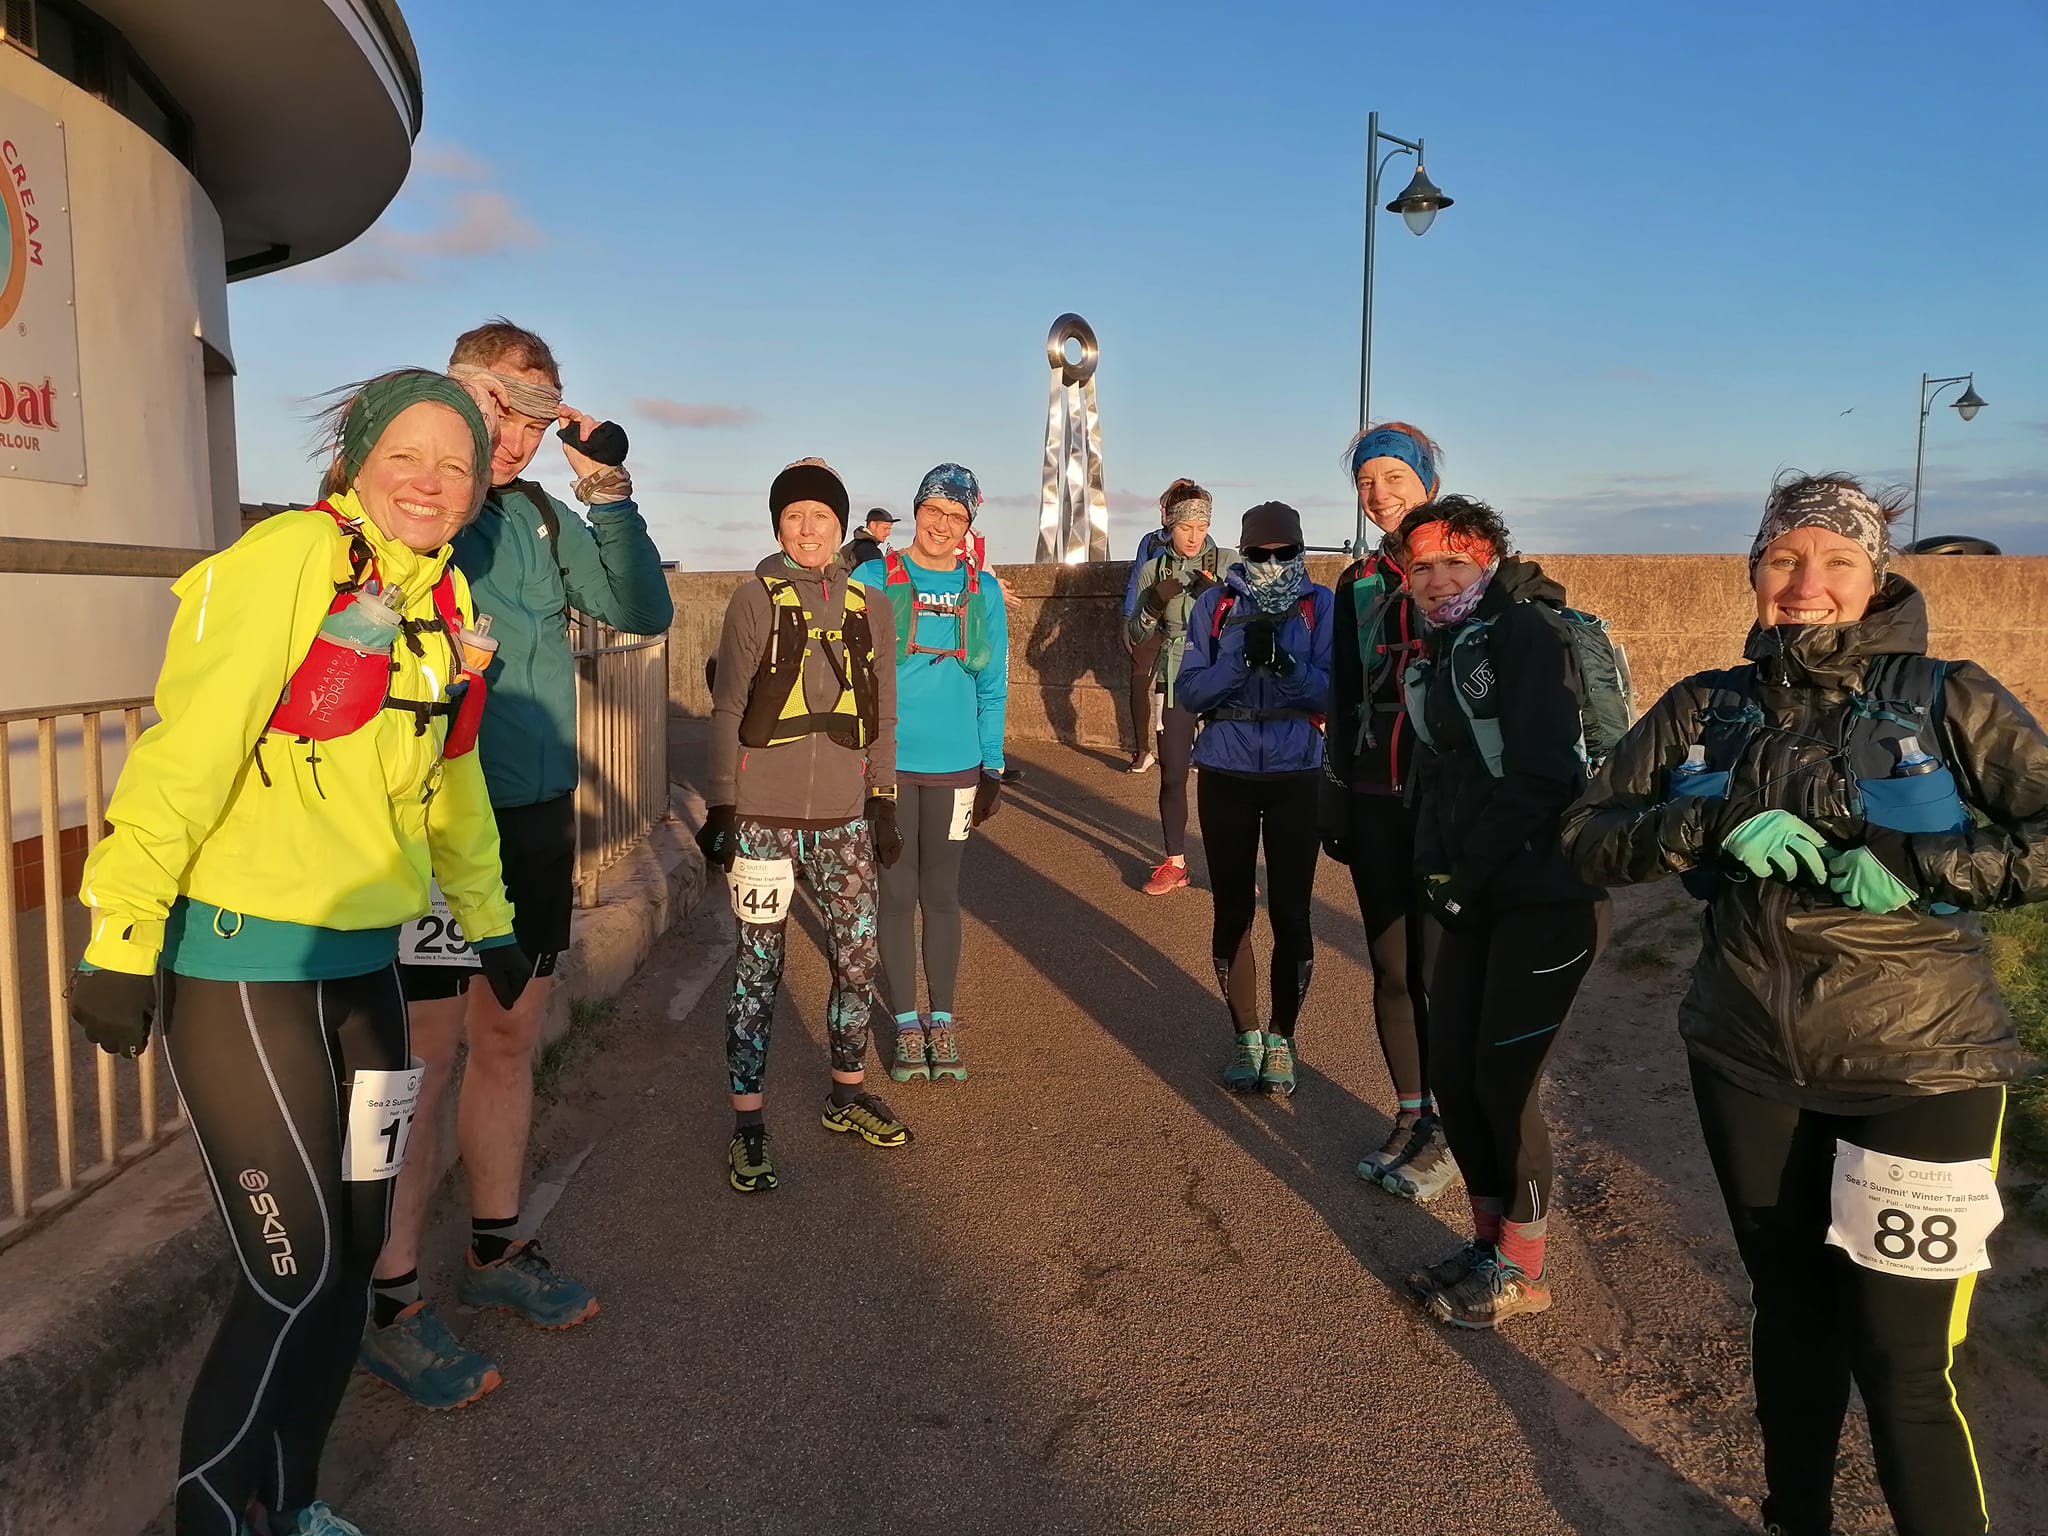 Summit 2 Sea - The Offa's Dyke Half Marathon